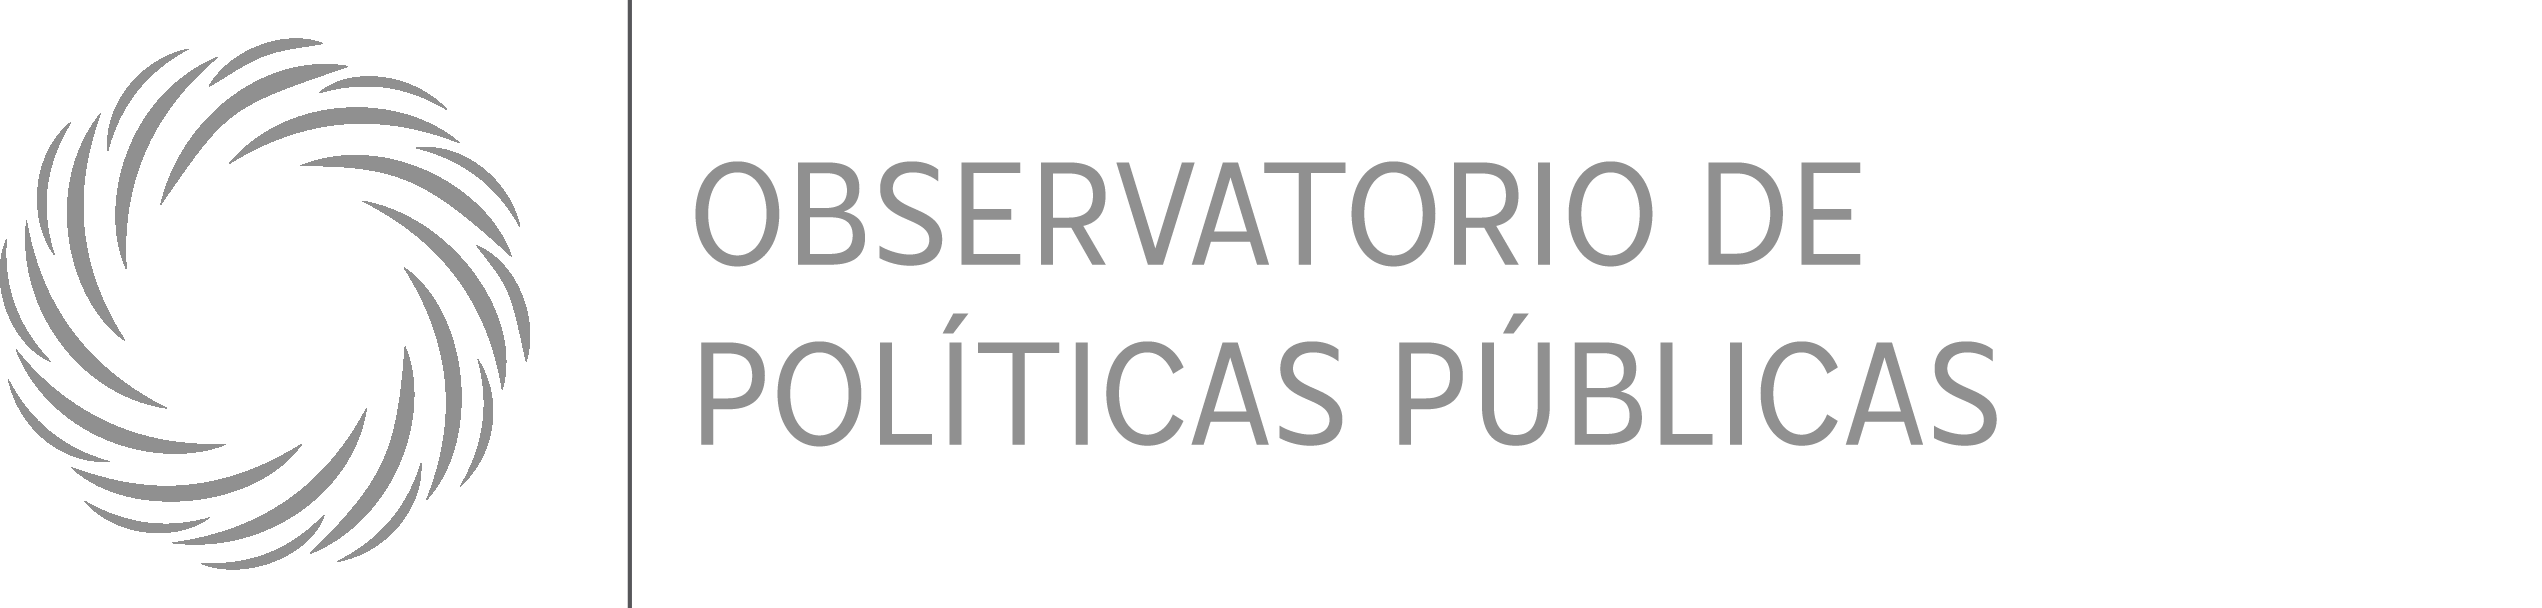 Observatorio de Politicas Publicas – Fundacion Metropolitana